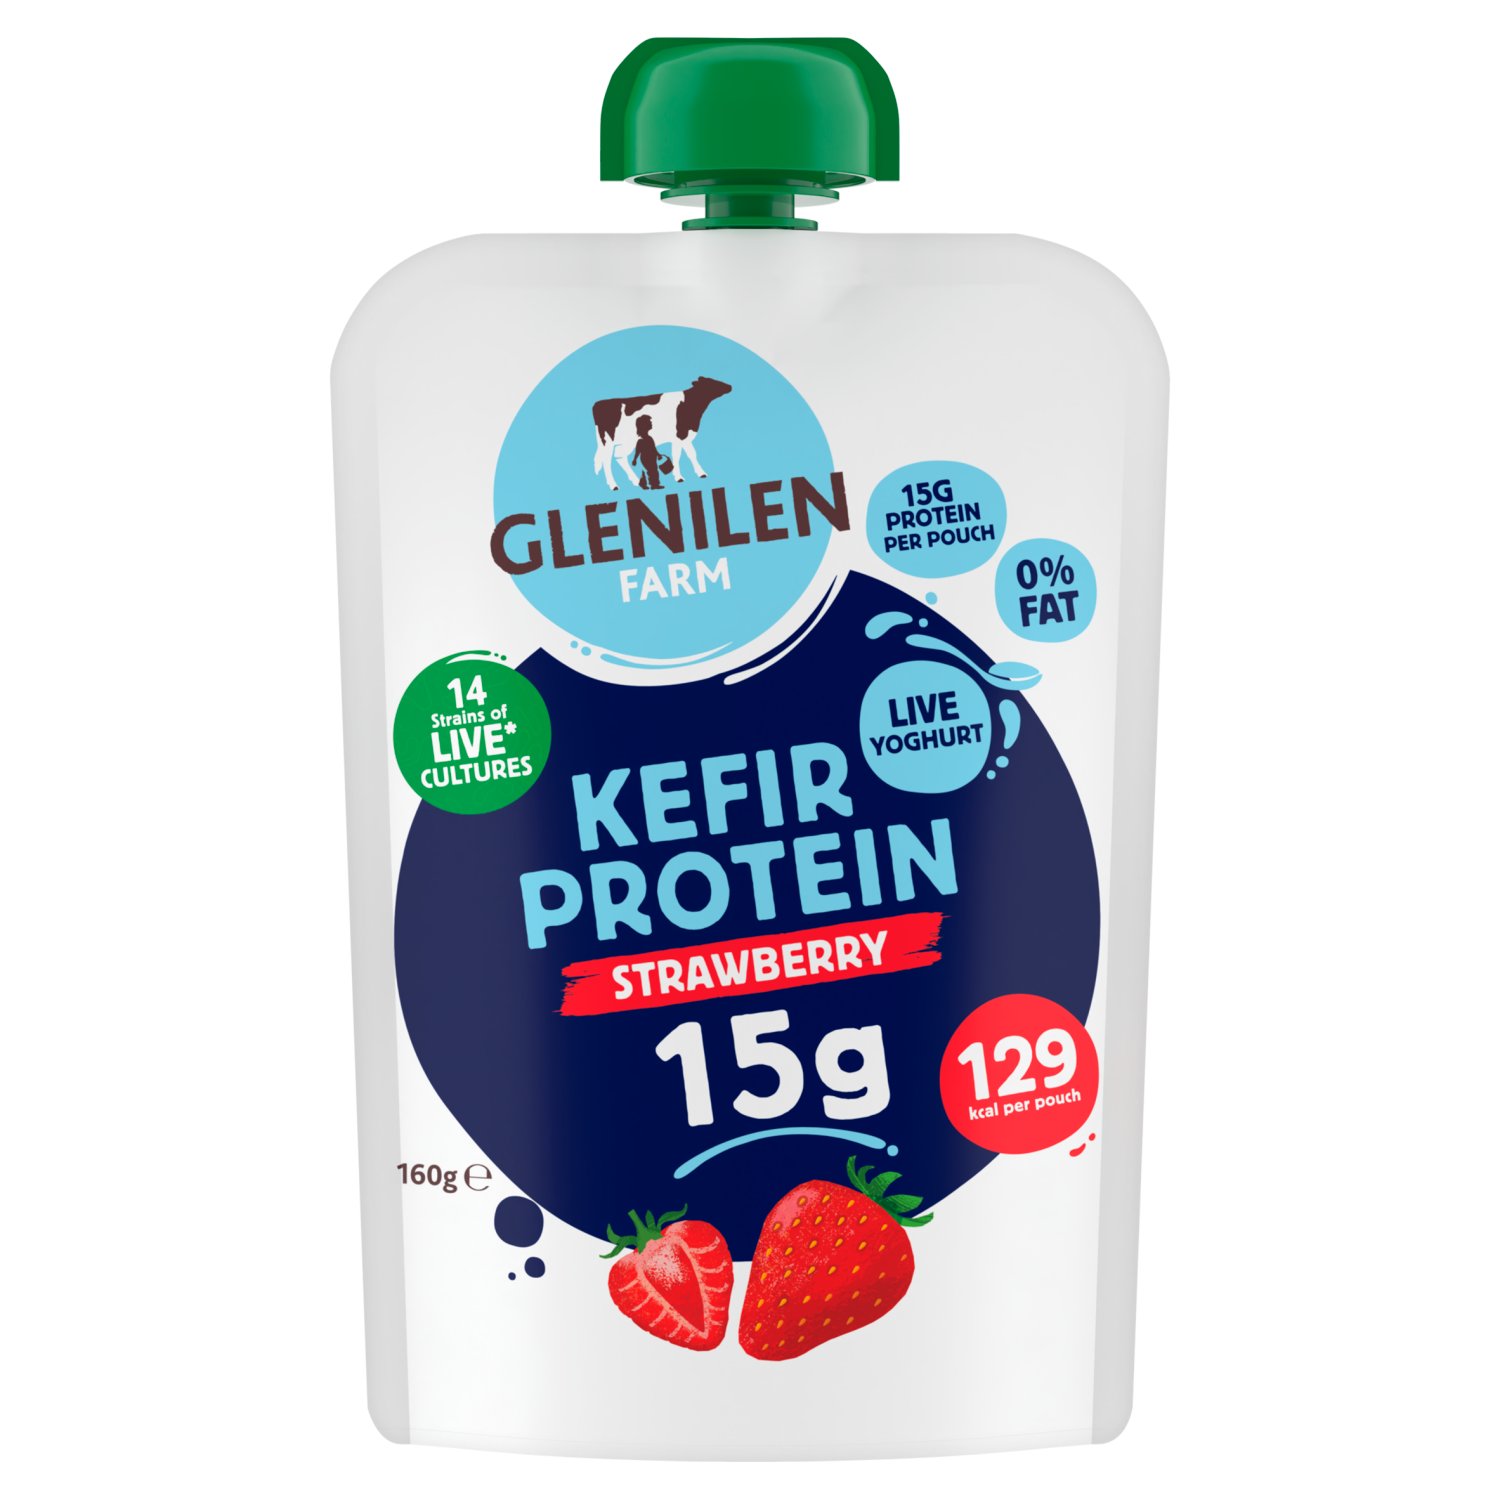 Glenilen Farm Kefir Protein Strawberry Yoghurt Pouch (160 g)